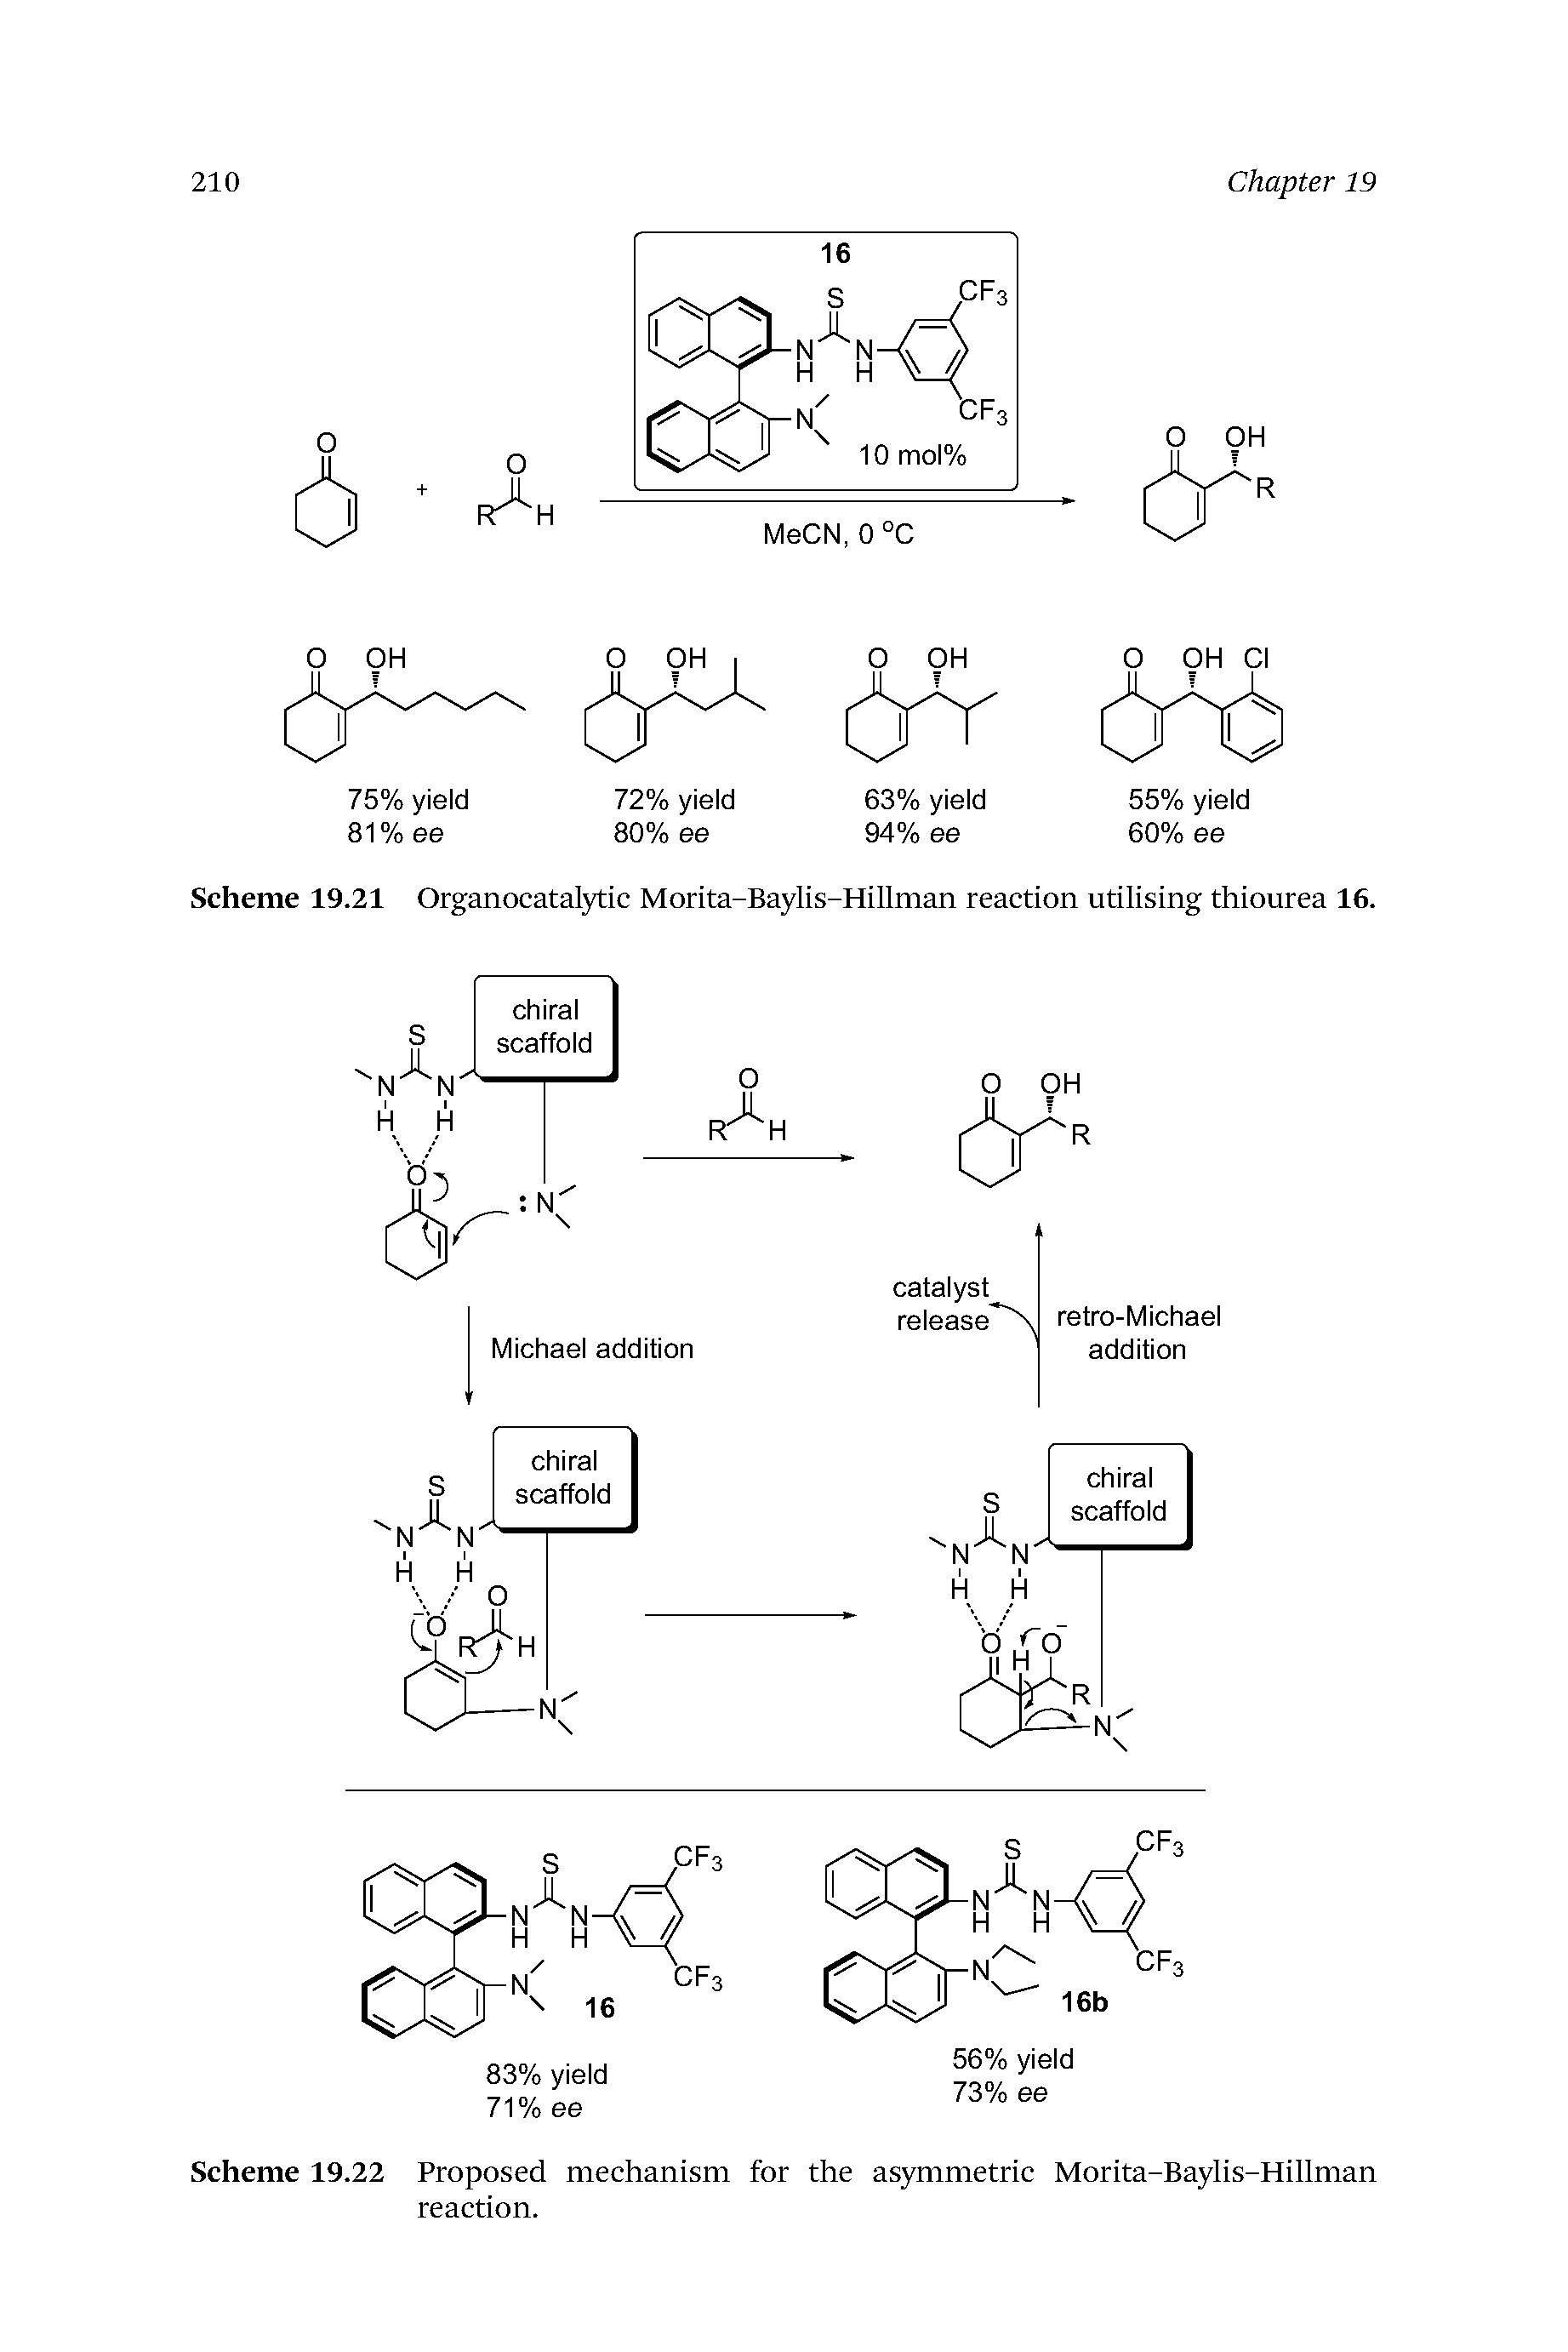 Scheme 19.22 Proposed mechanism for the asymmetric Morita-Baylis-Hillman reaction.